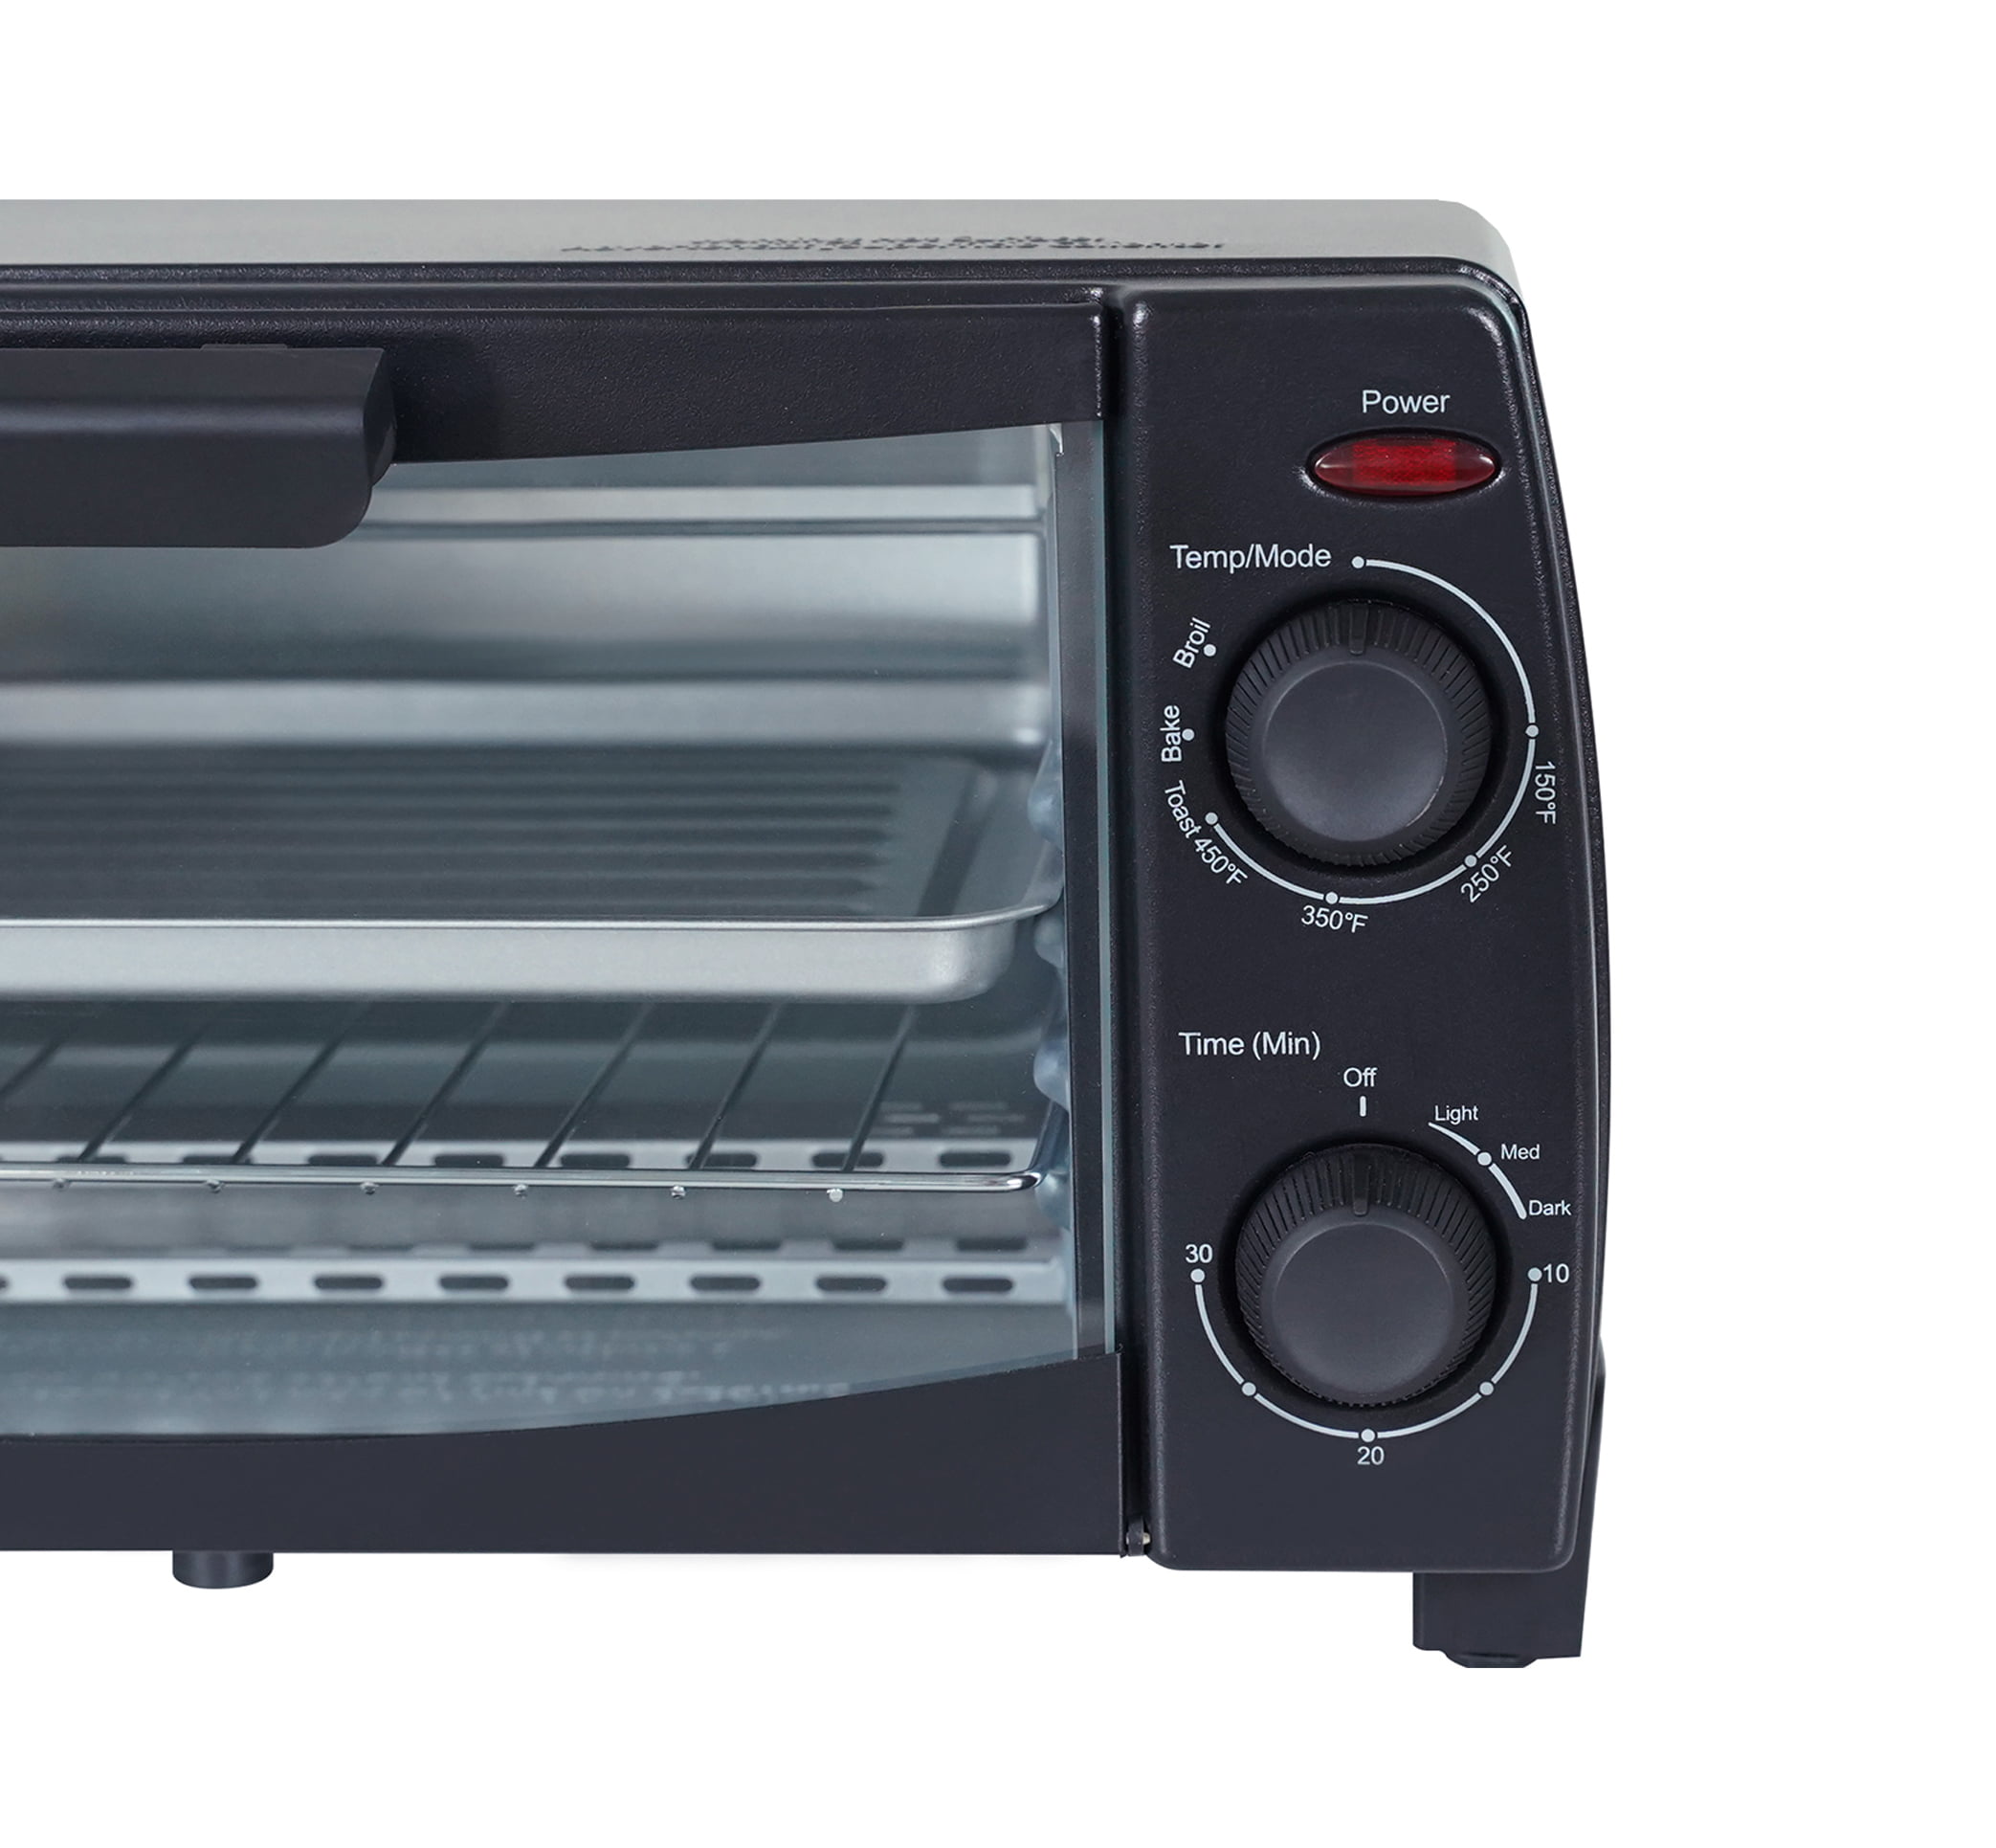 Toaster Ovens & Toasters